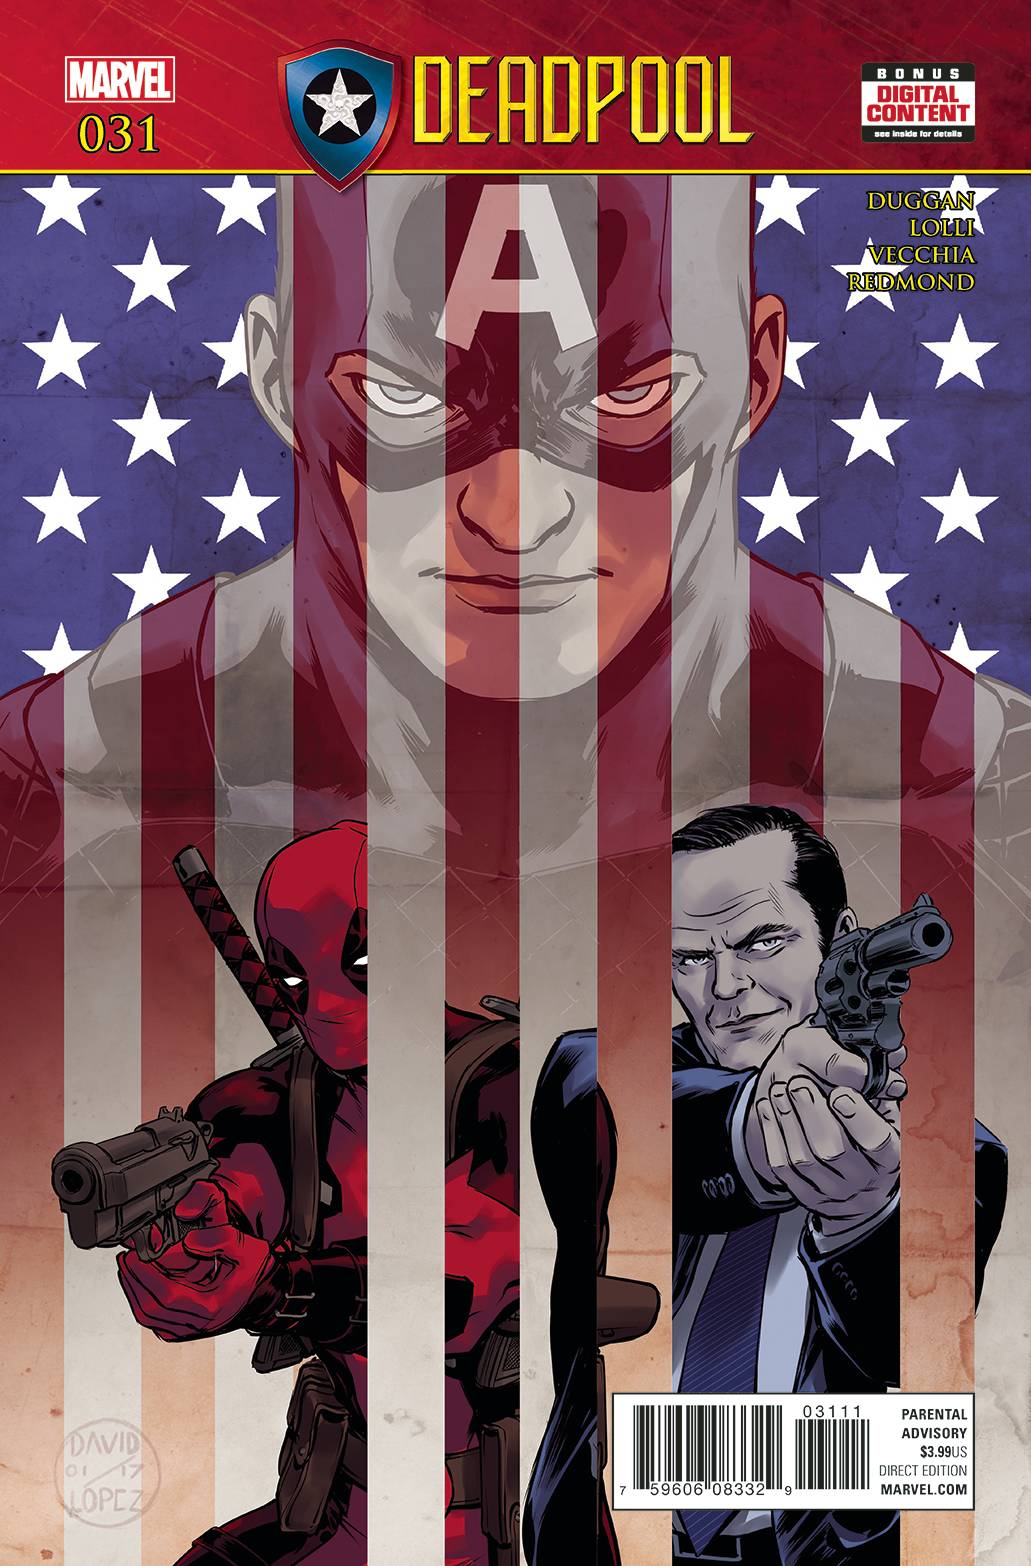 Deadpool #31 - State of Comics